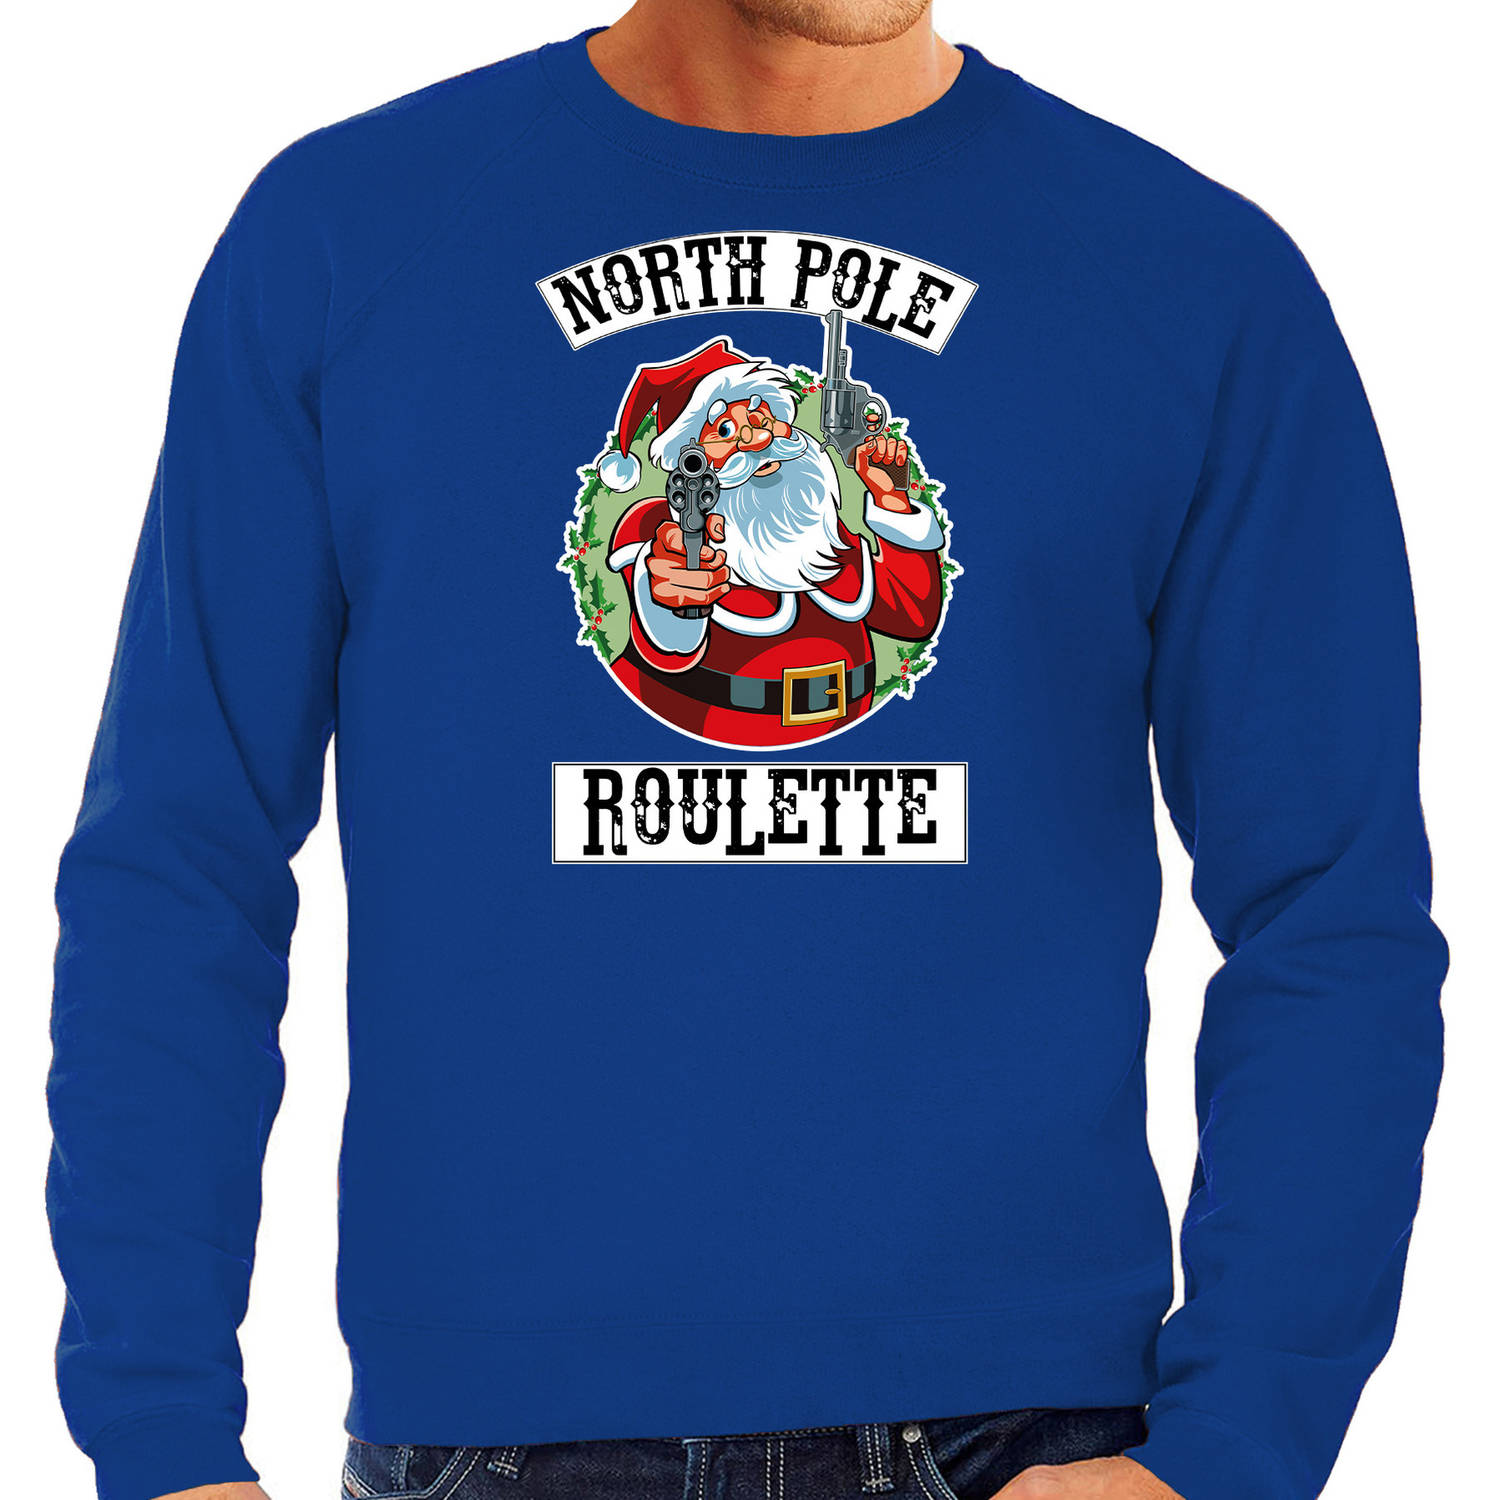 Blauwe Kersttrui / Kerstkleding Northpole roulette voor heren 2XL - kerst truien